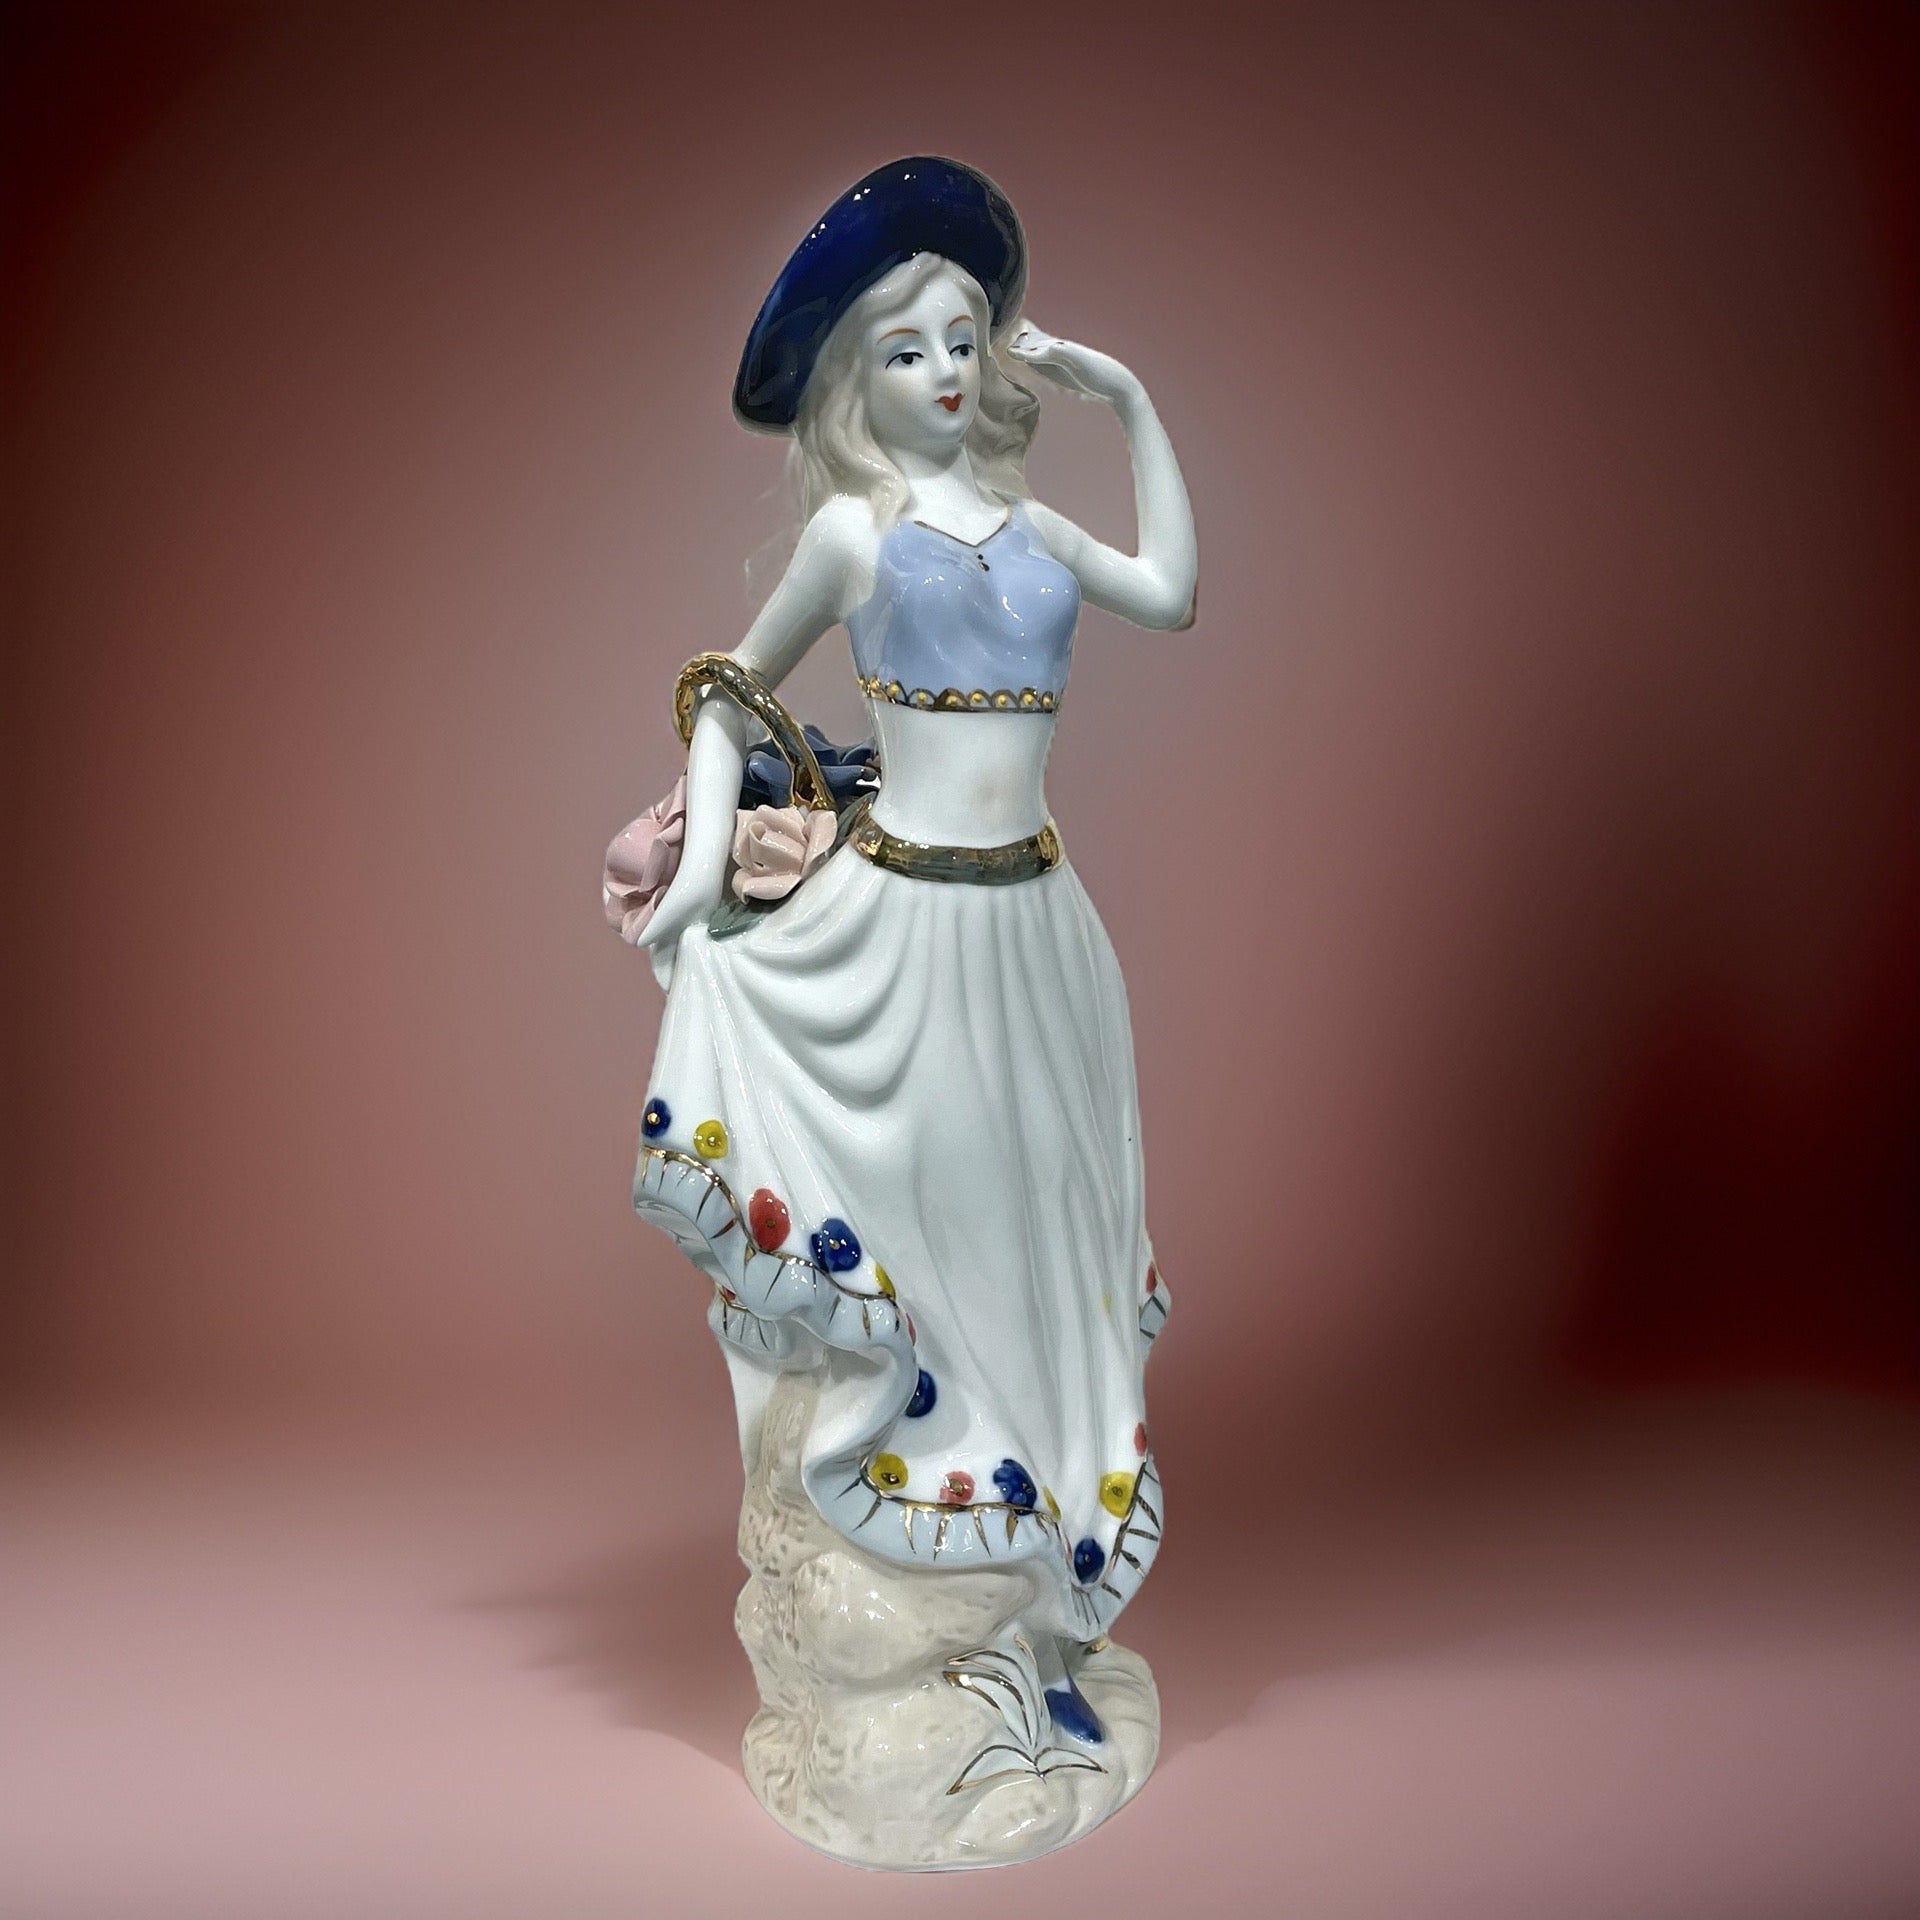 Figurine - Alice with Big Flower Basket